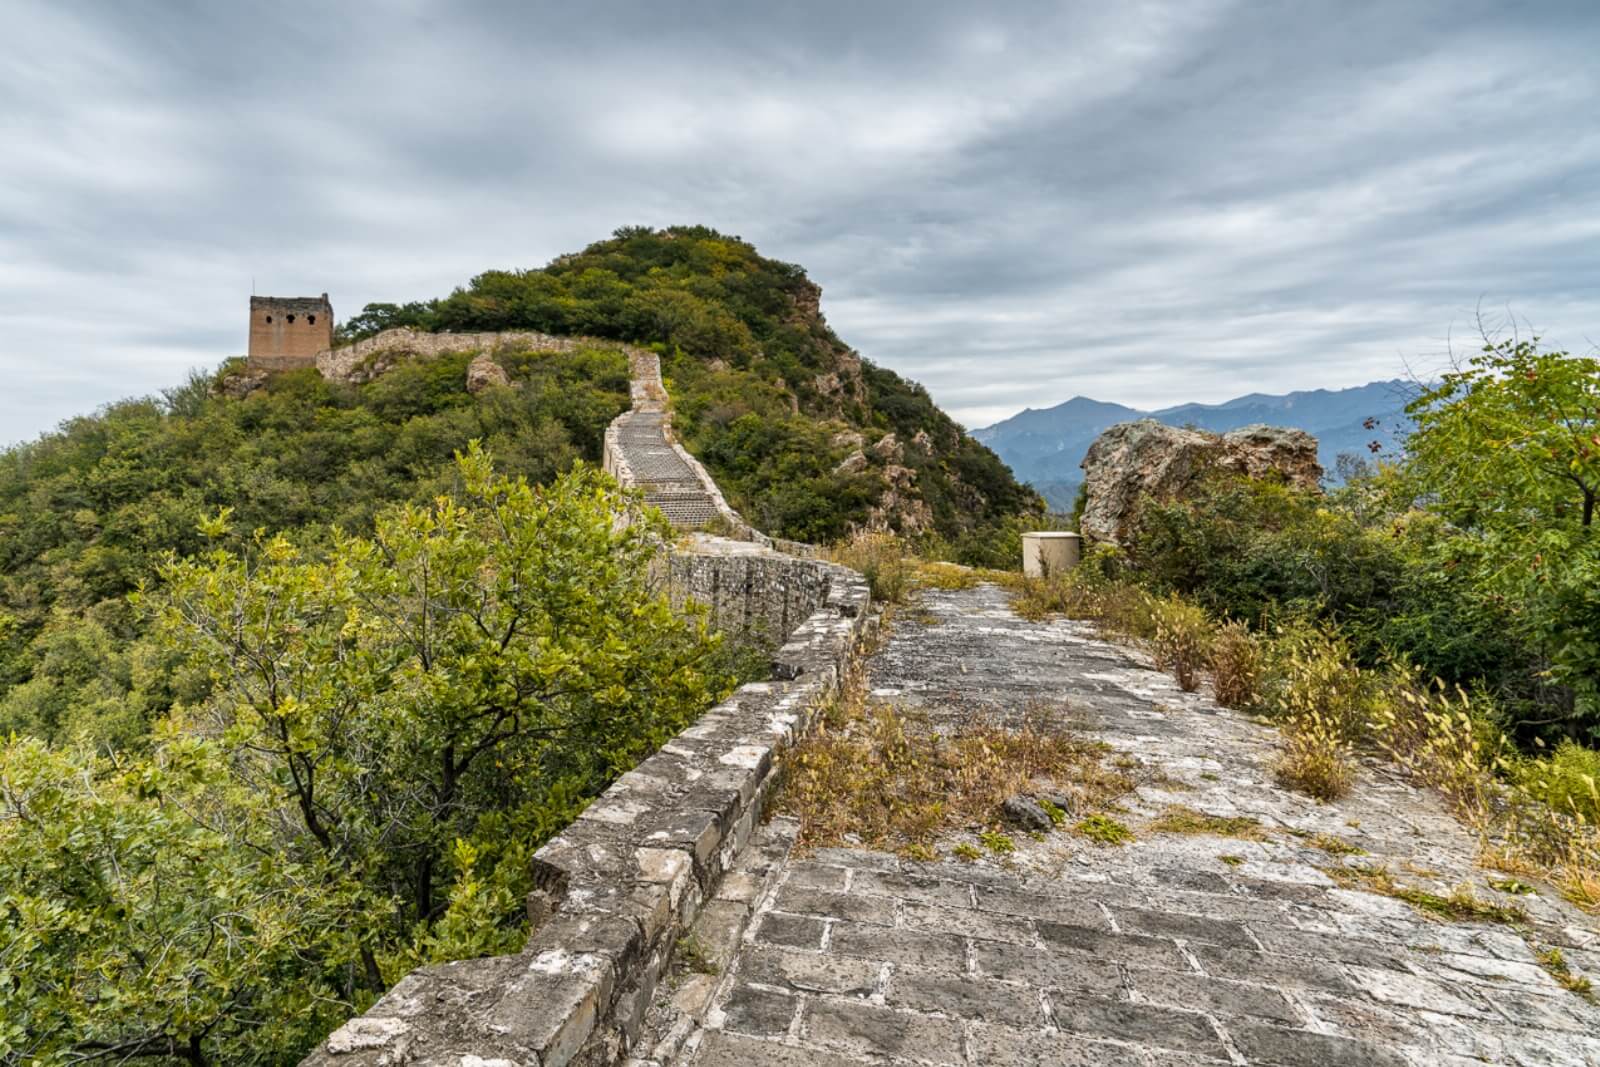 Image of The Great Wall at Simatai by James Billings.